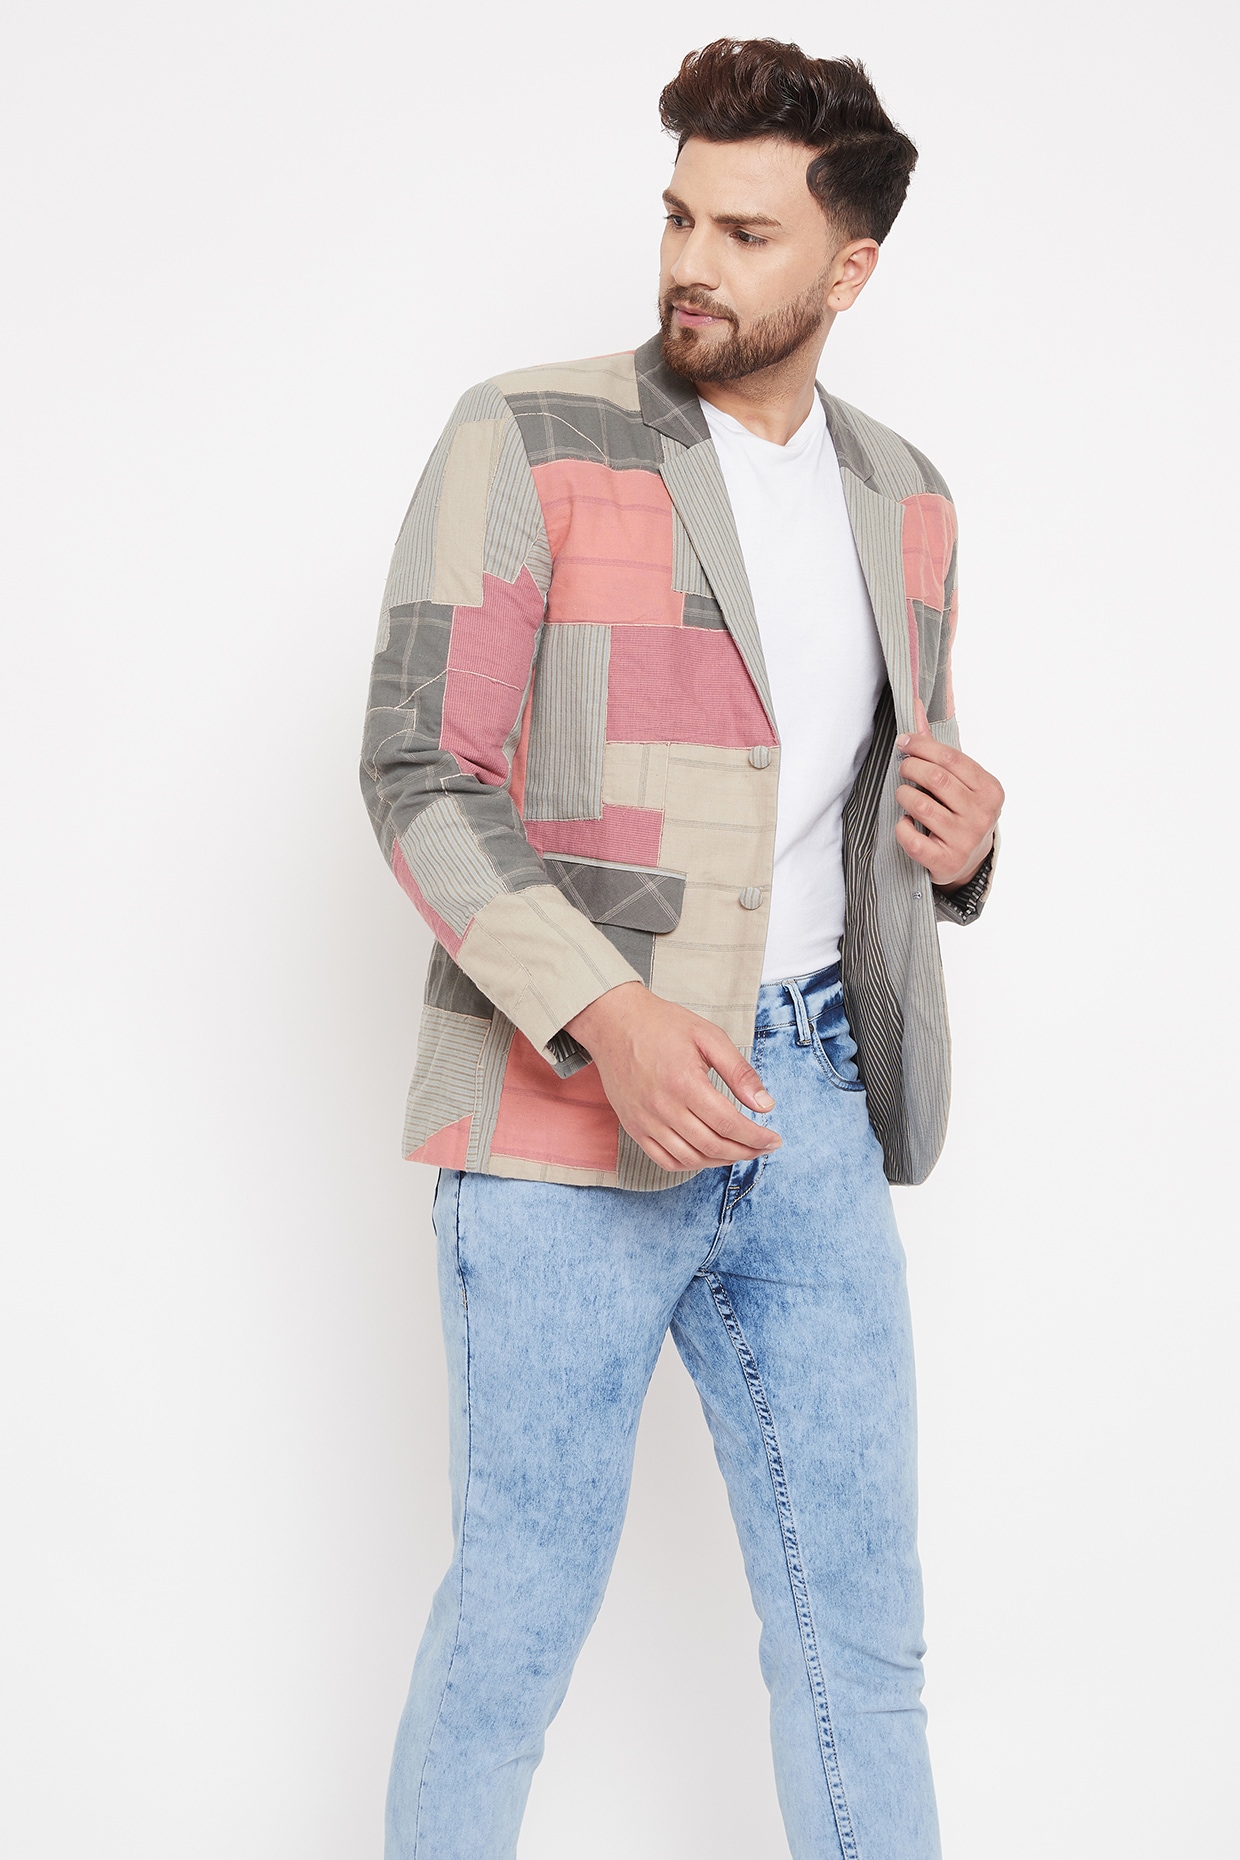 Doodlage Men - Multi-Colored Cotton Blend Blazer for Men at Pernia's Pop-Up Shop